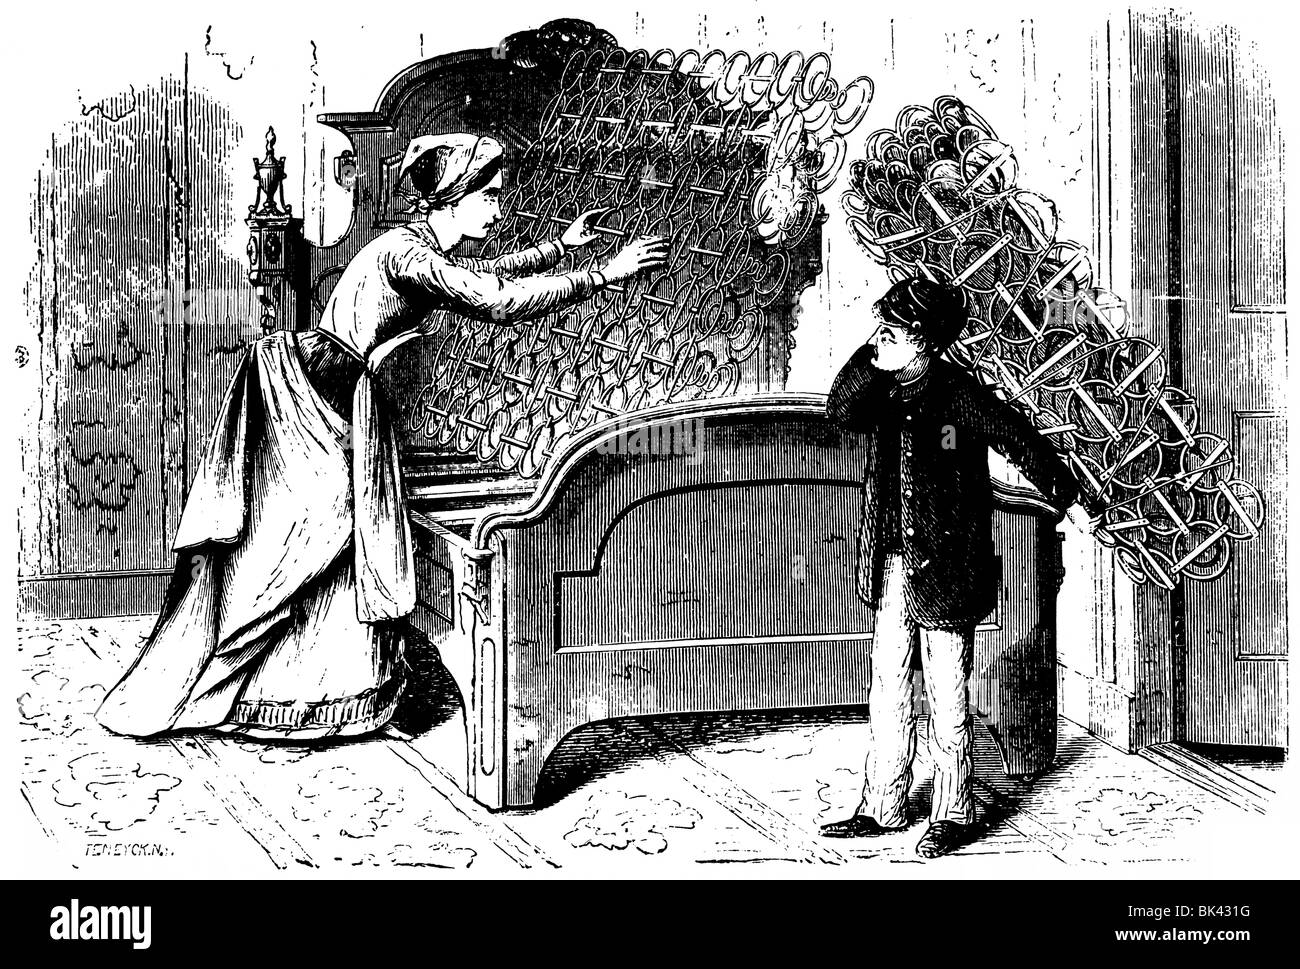 Novelty Interior Sprung Mattresses, 1871 Stock Photo